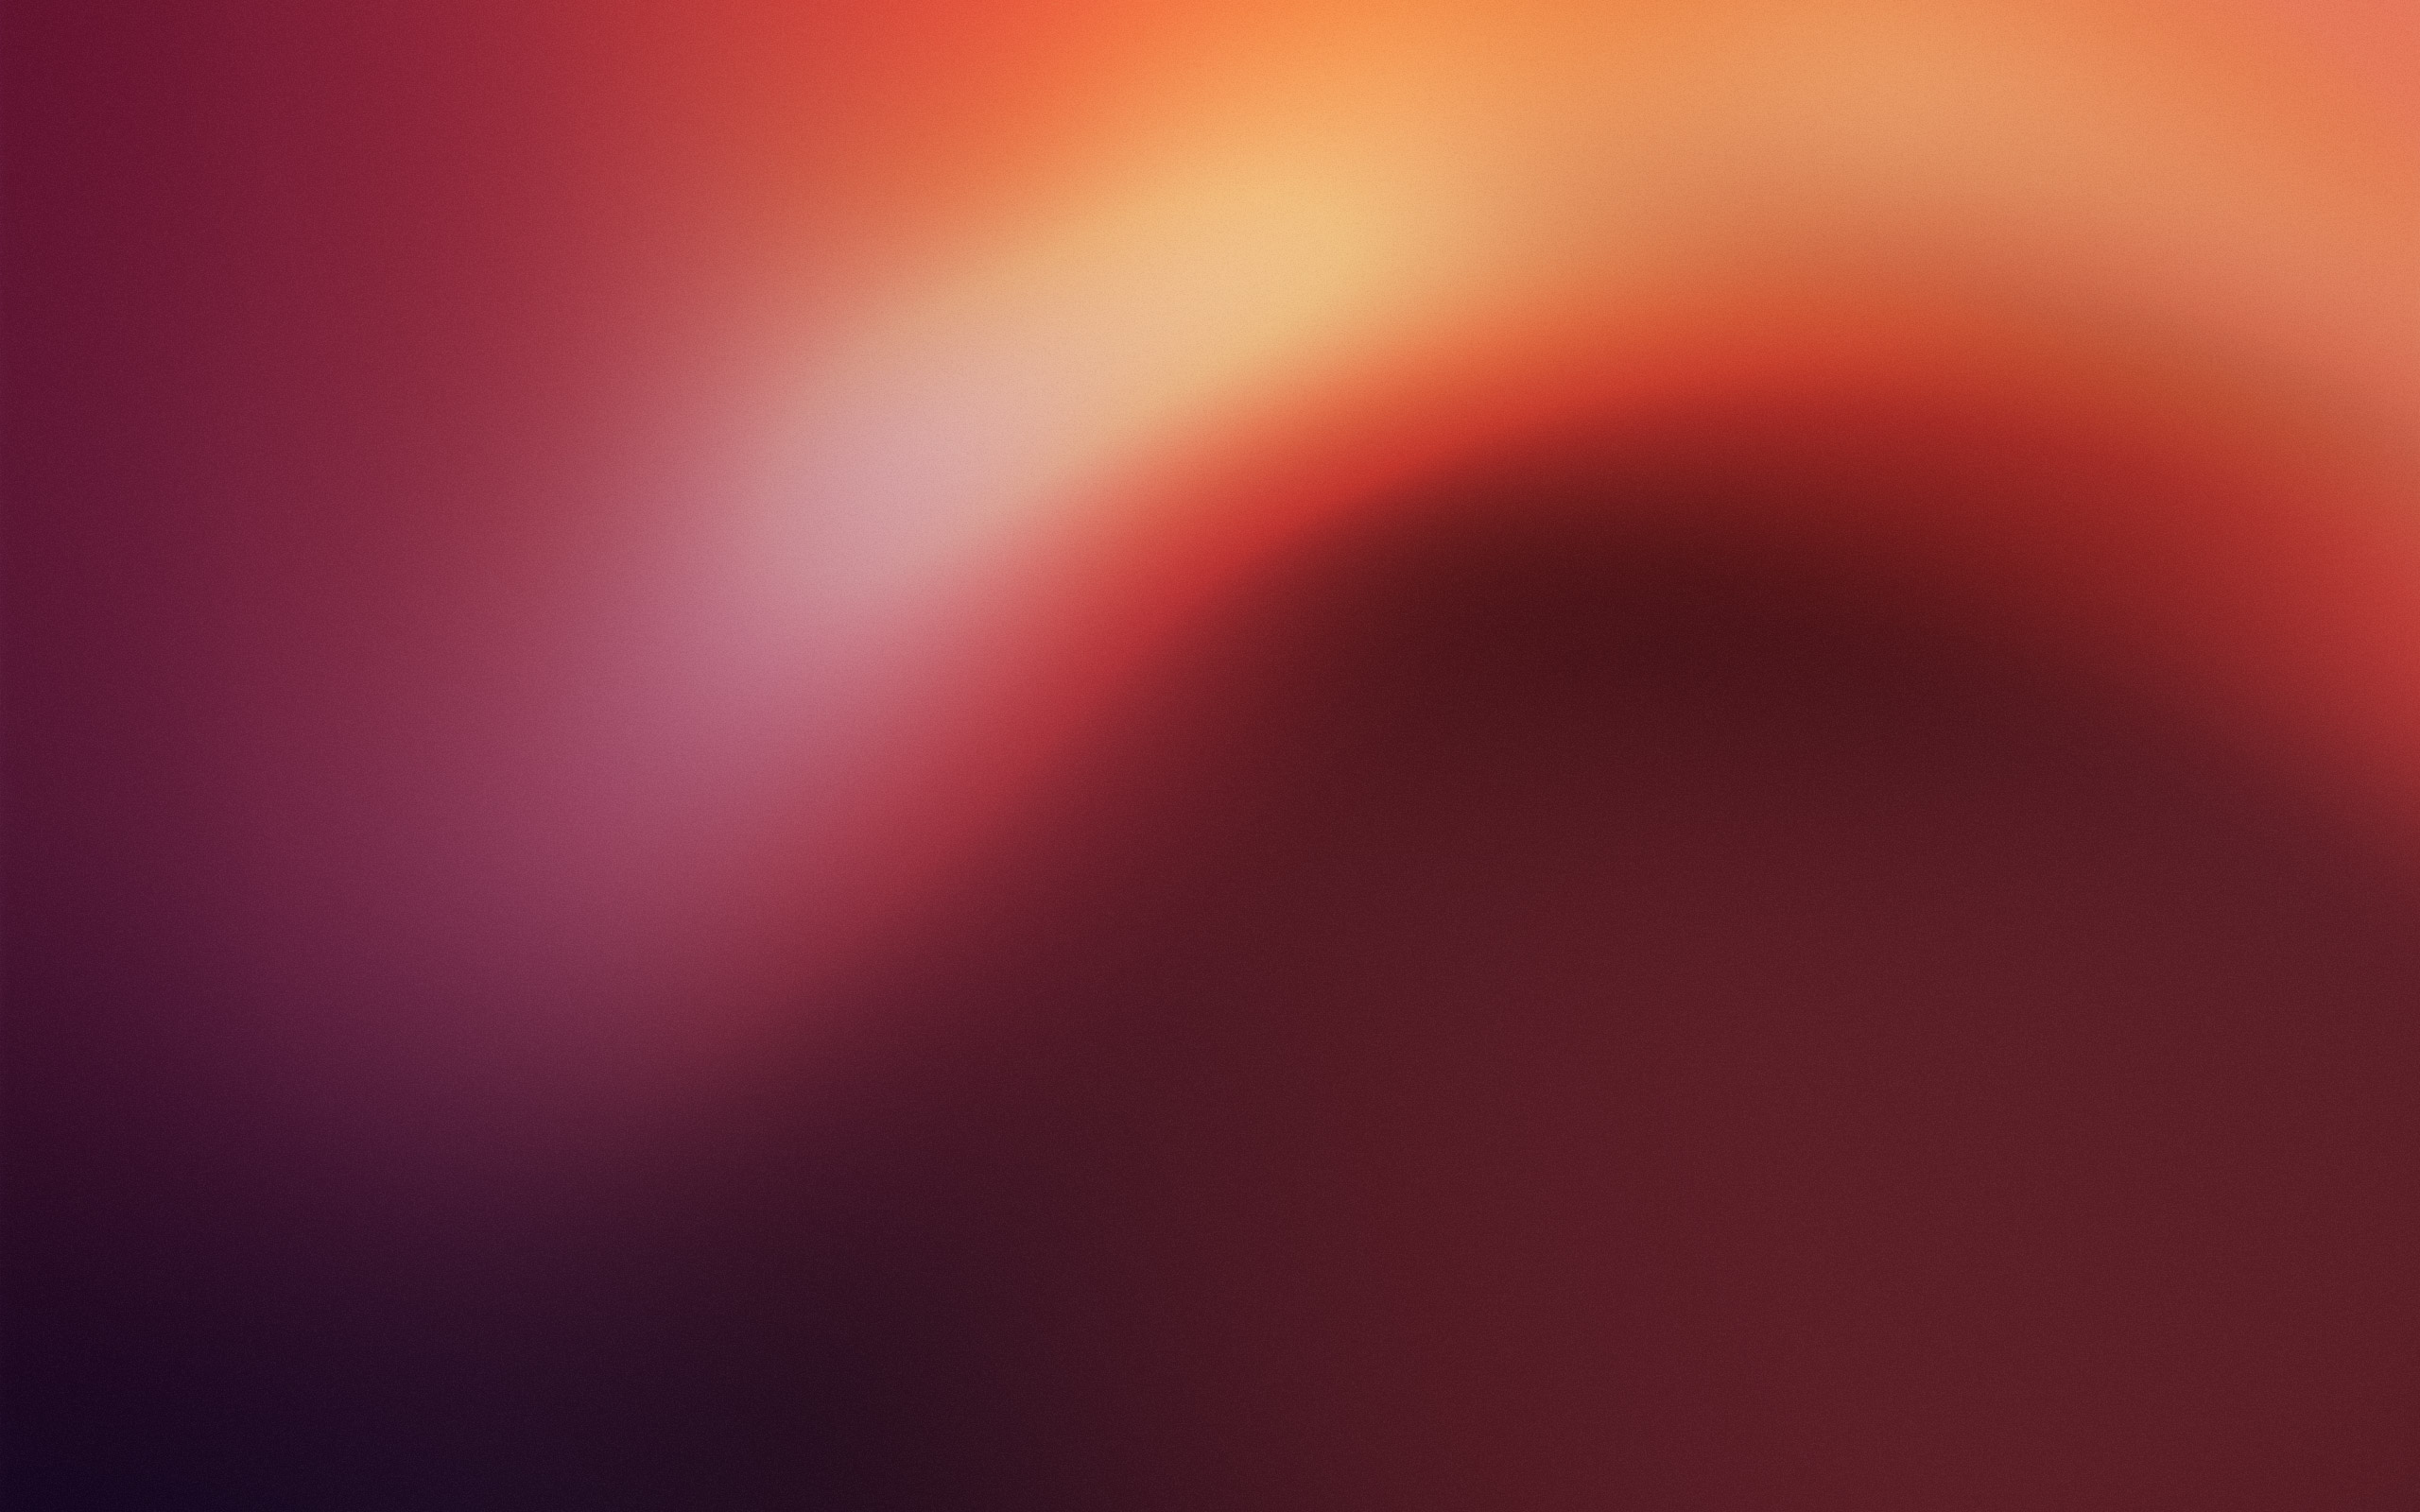 Default Ubuntu Wallpaper From Warty Warthog To